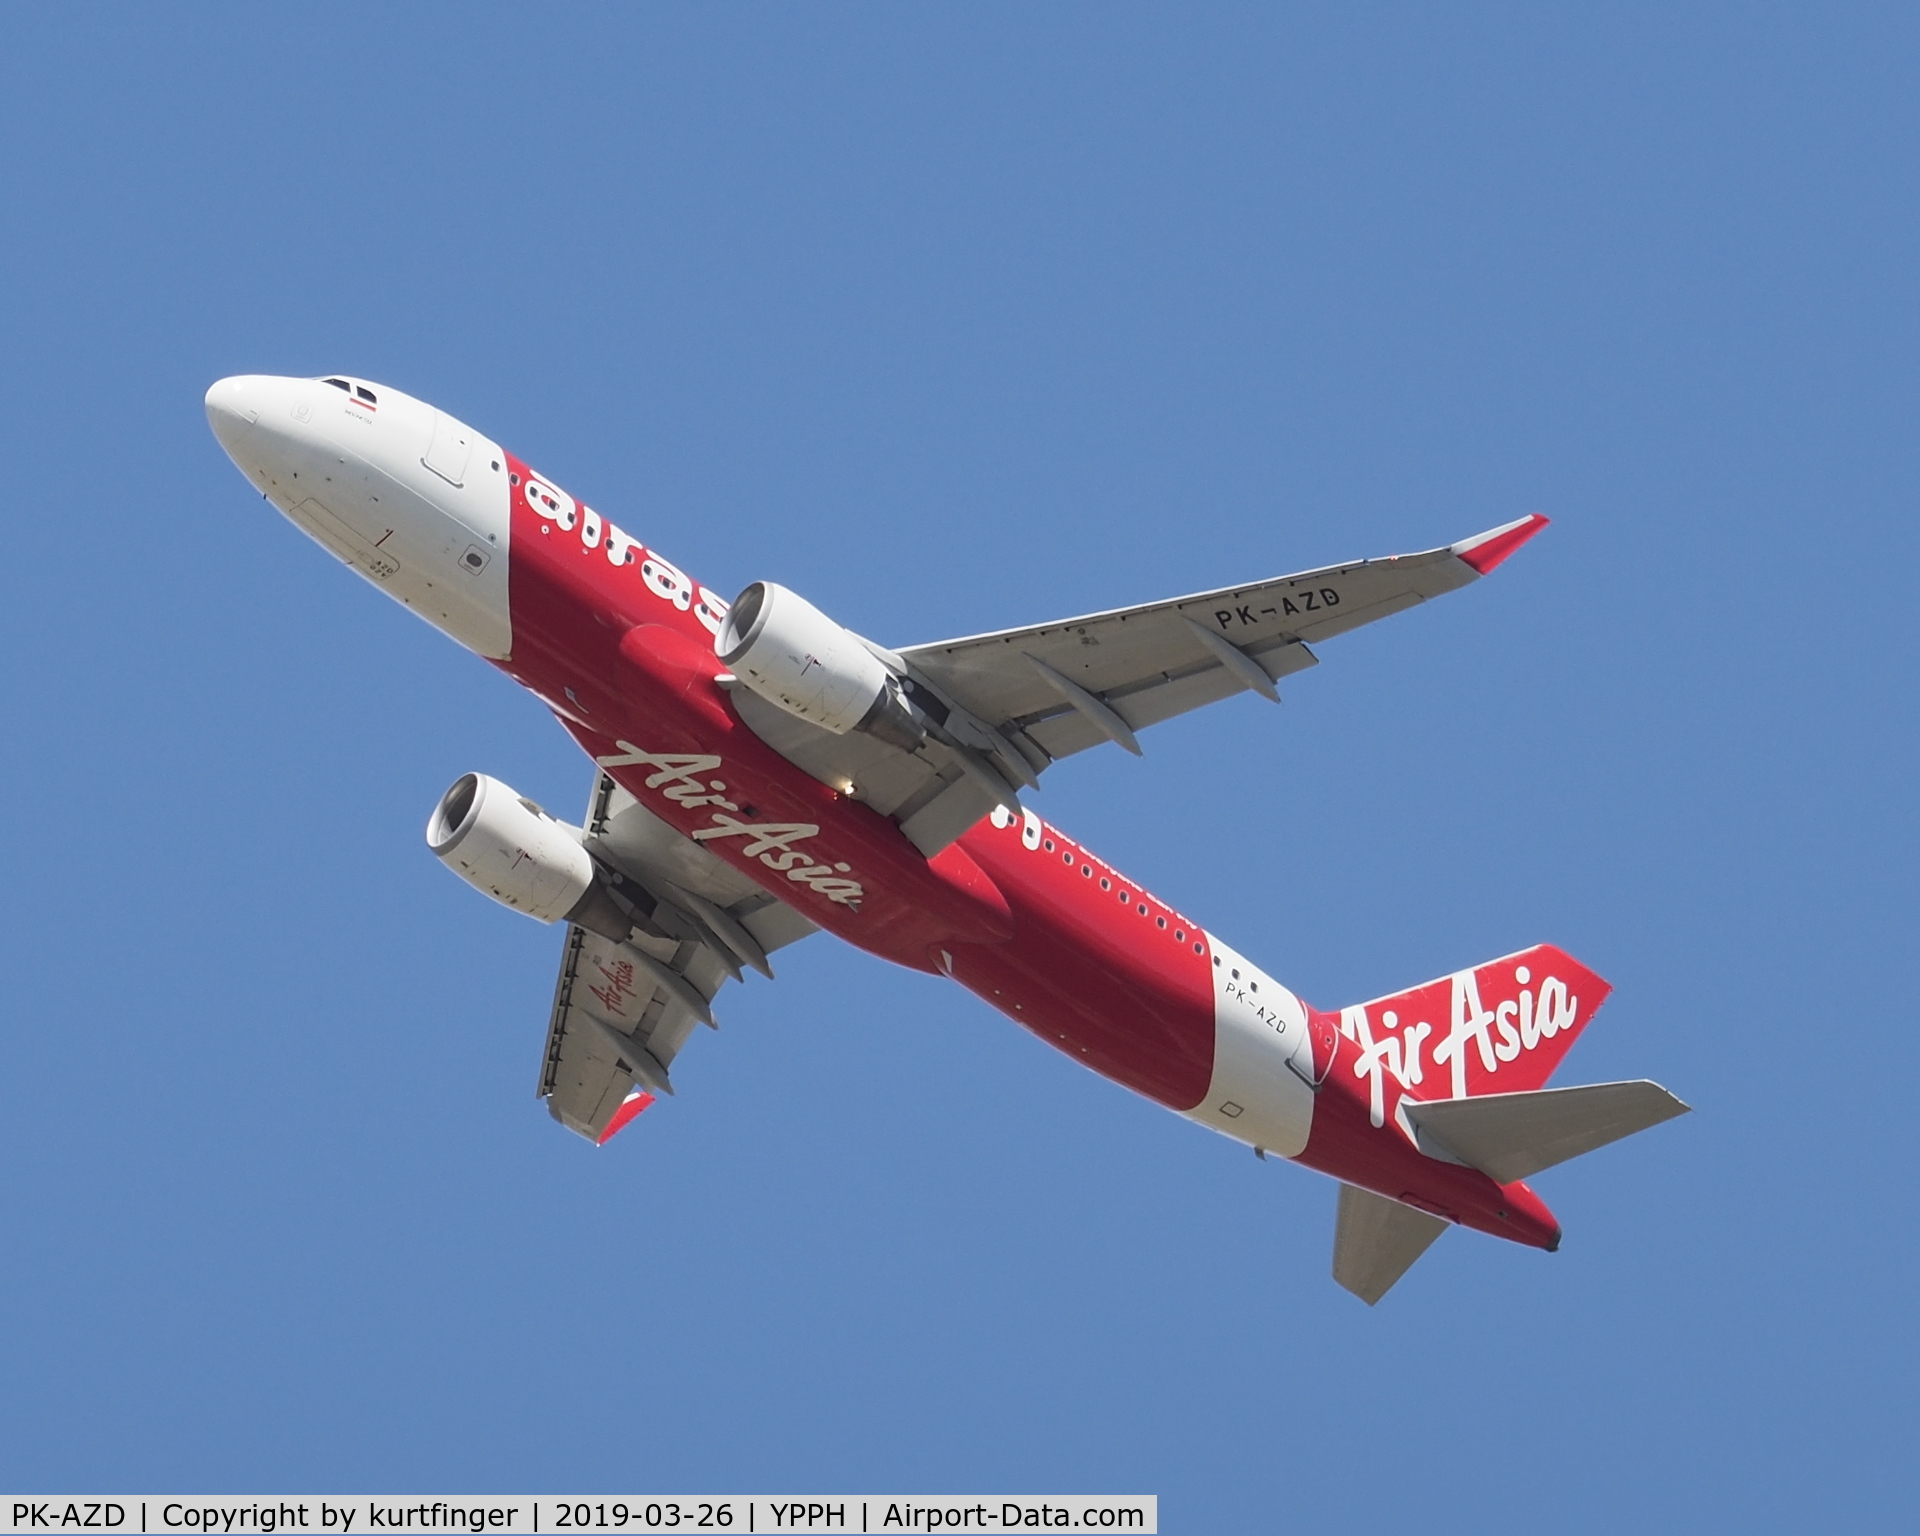 PK-AZD, 2013 Airbus A320-216 C/N 5627, Airbus A320-216. AirAsia PK-AZD, departing runway 03 YPPH 26/03/19.